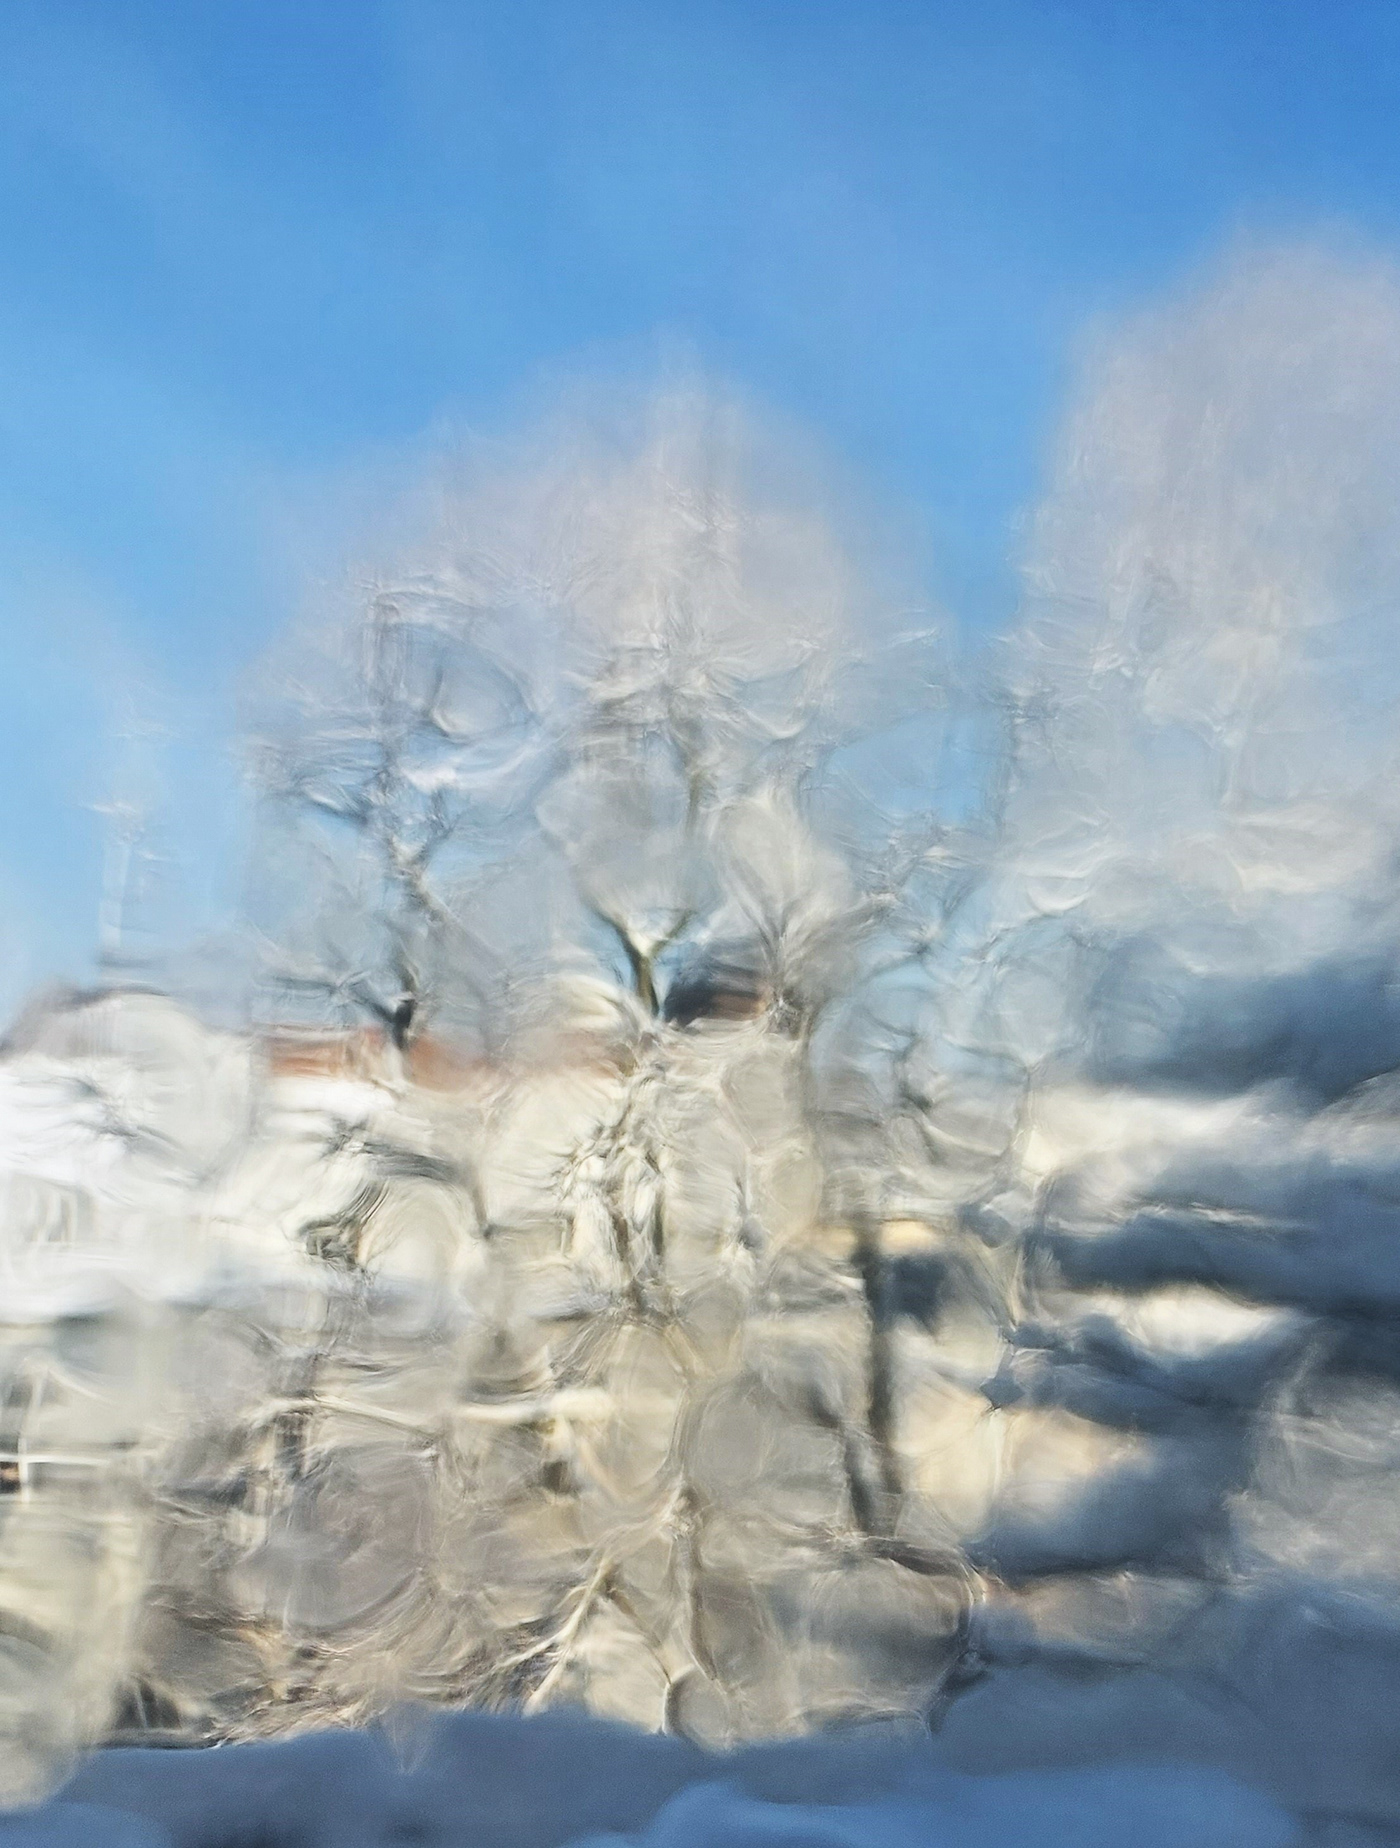 abstract artwork art photography art photo blue experimental glass winter snow fantasy art